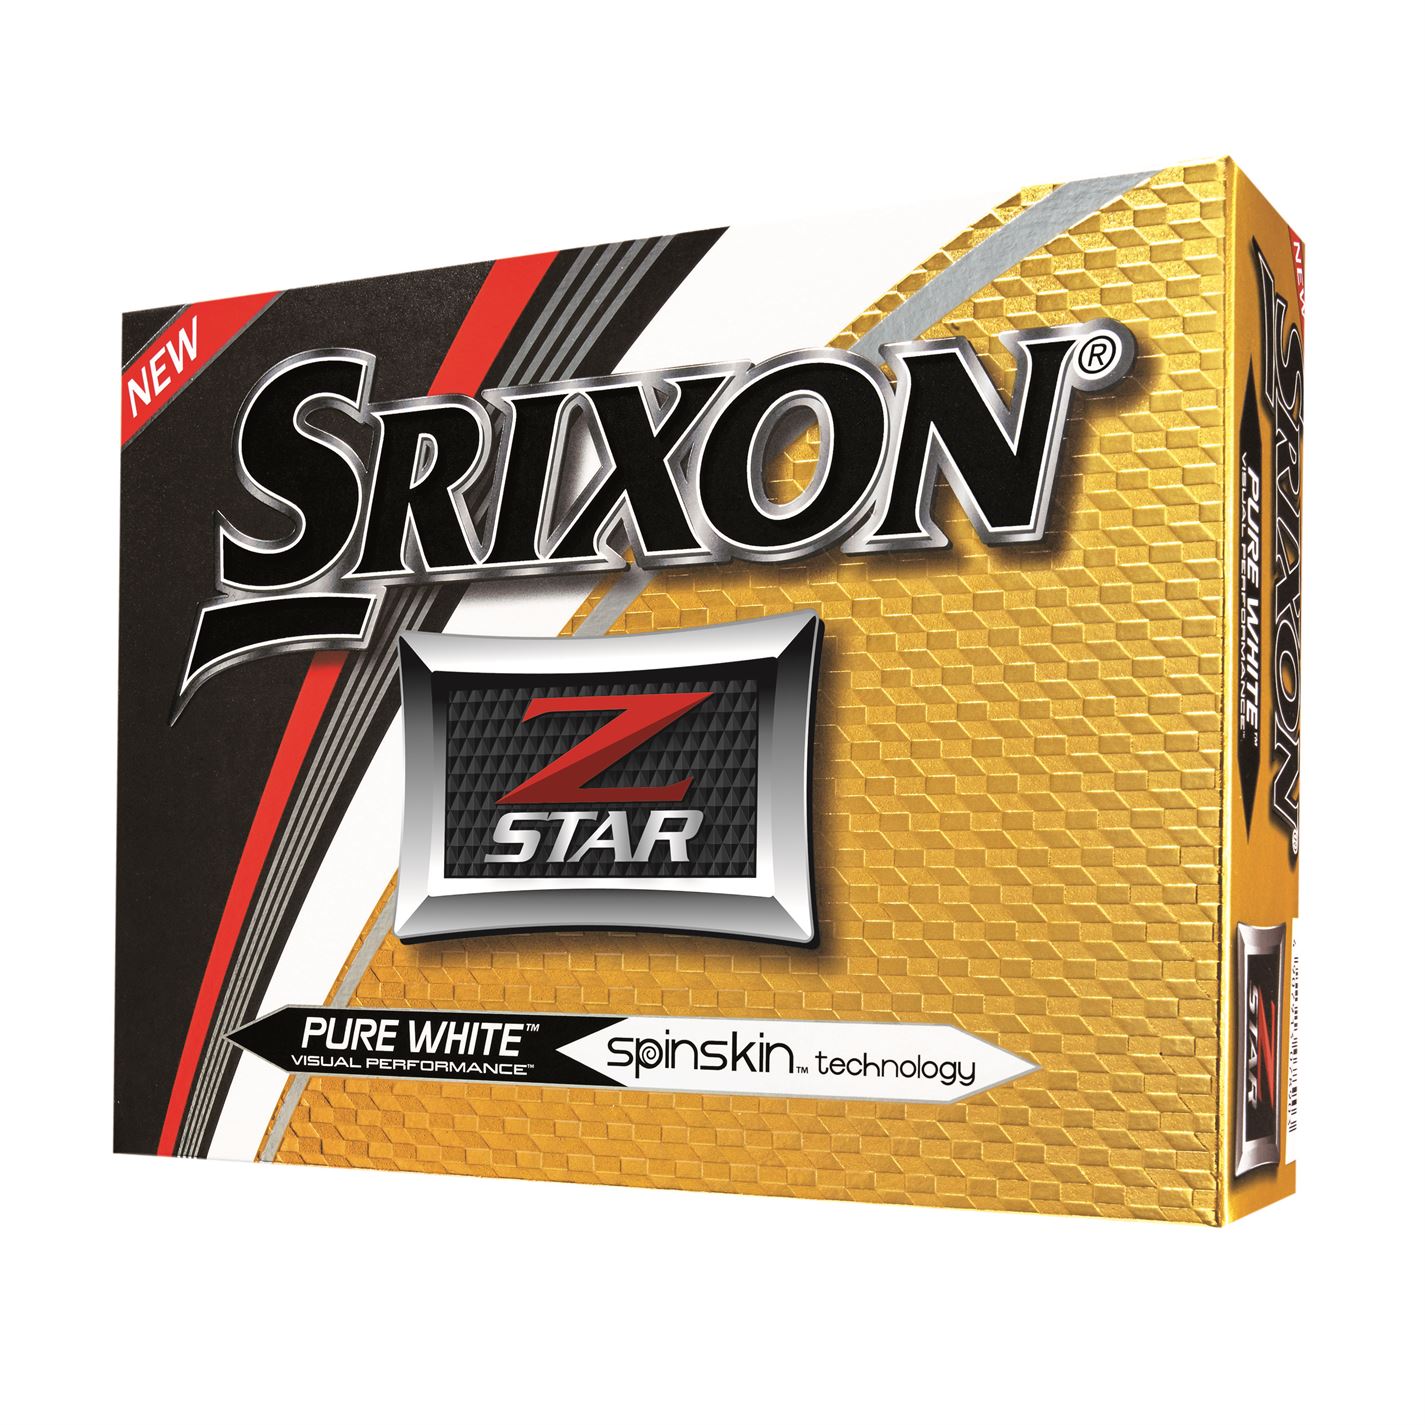 Srixon Z Star 5 12 Pack